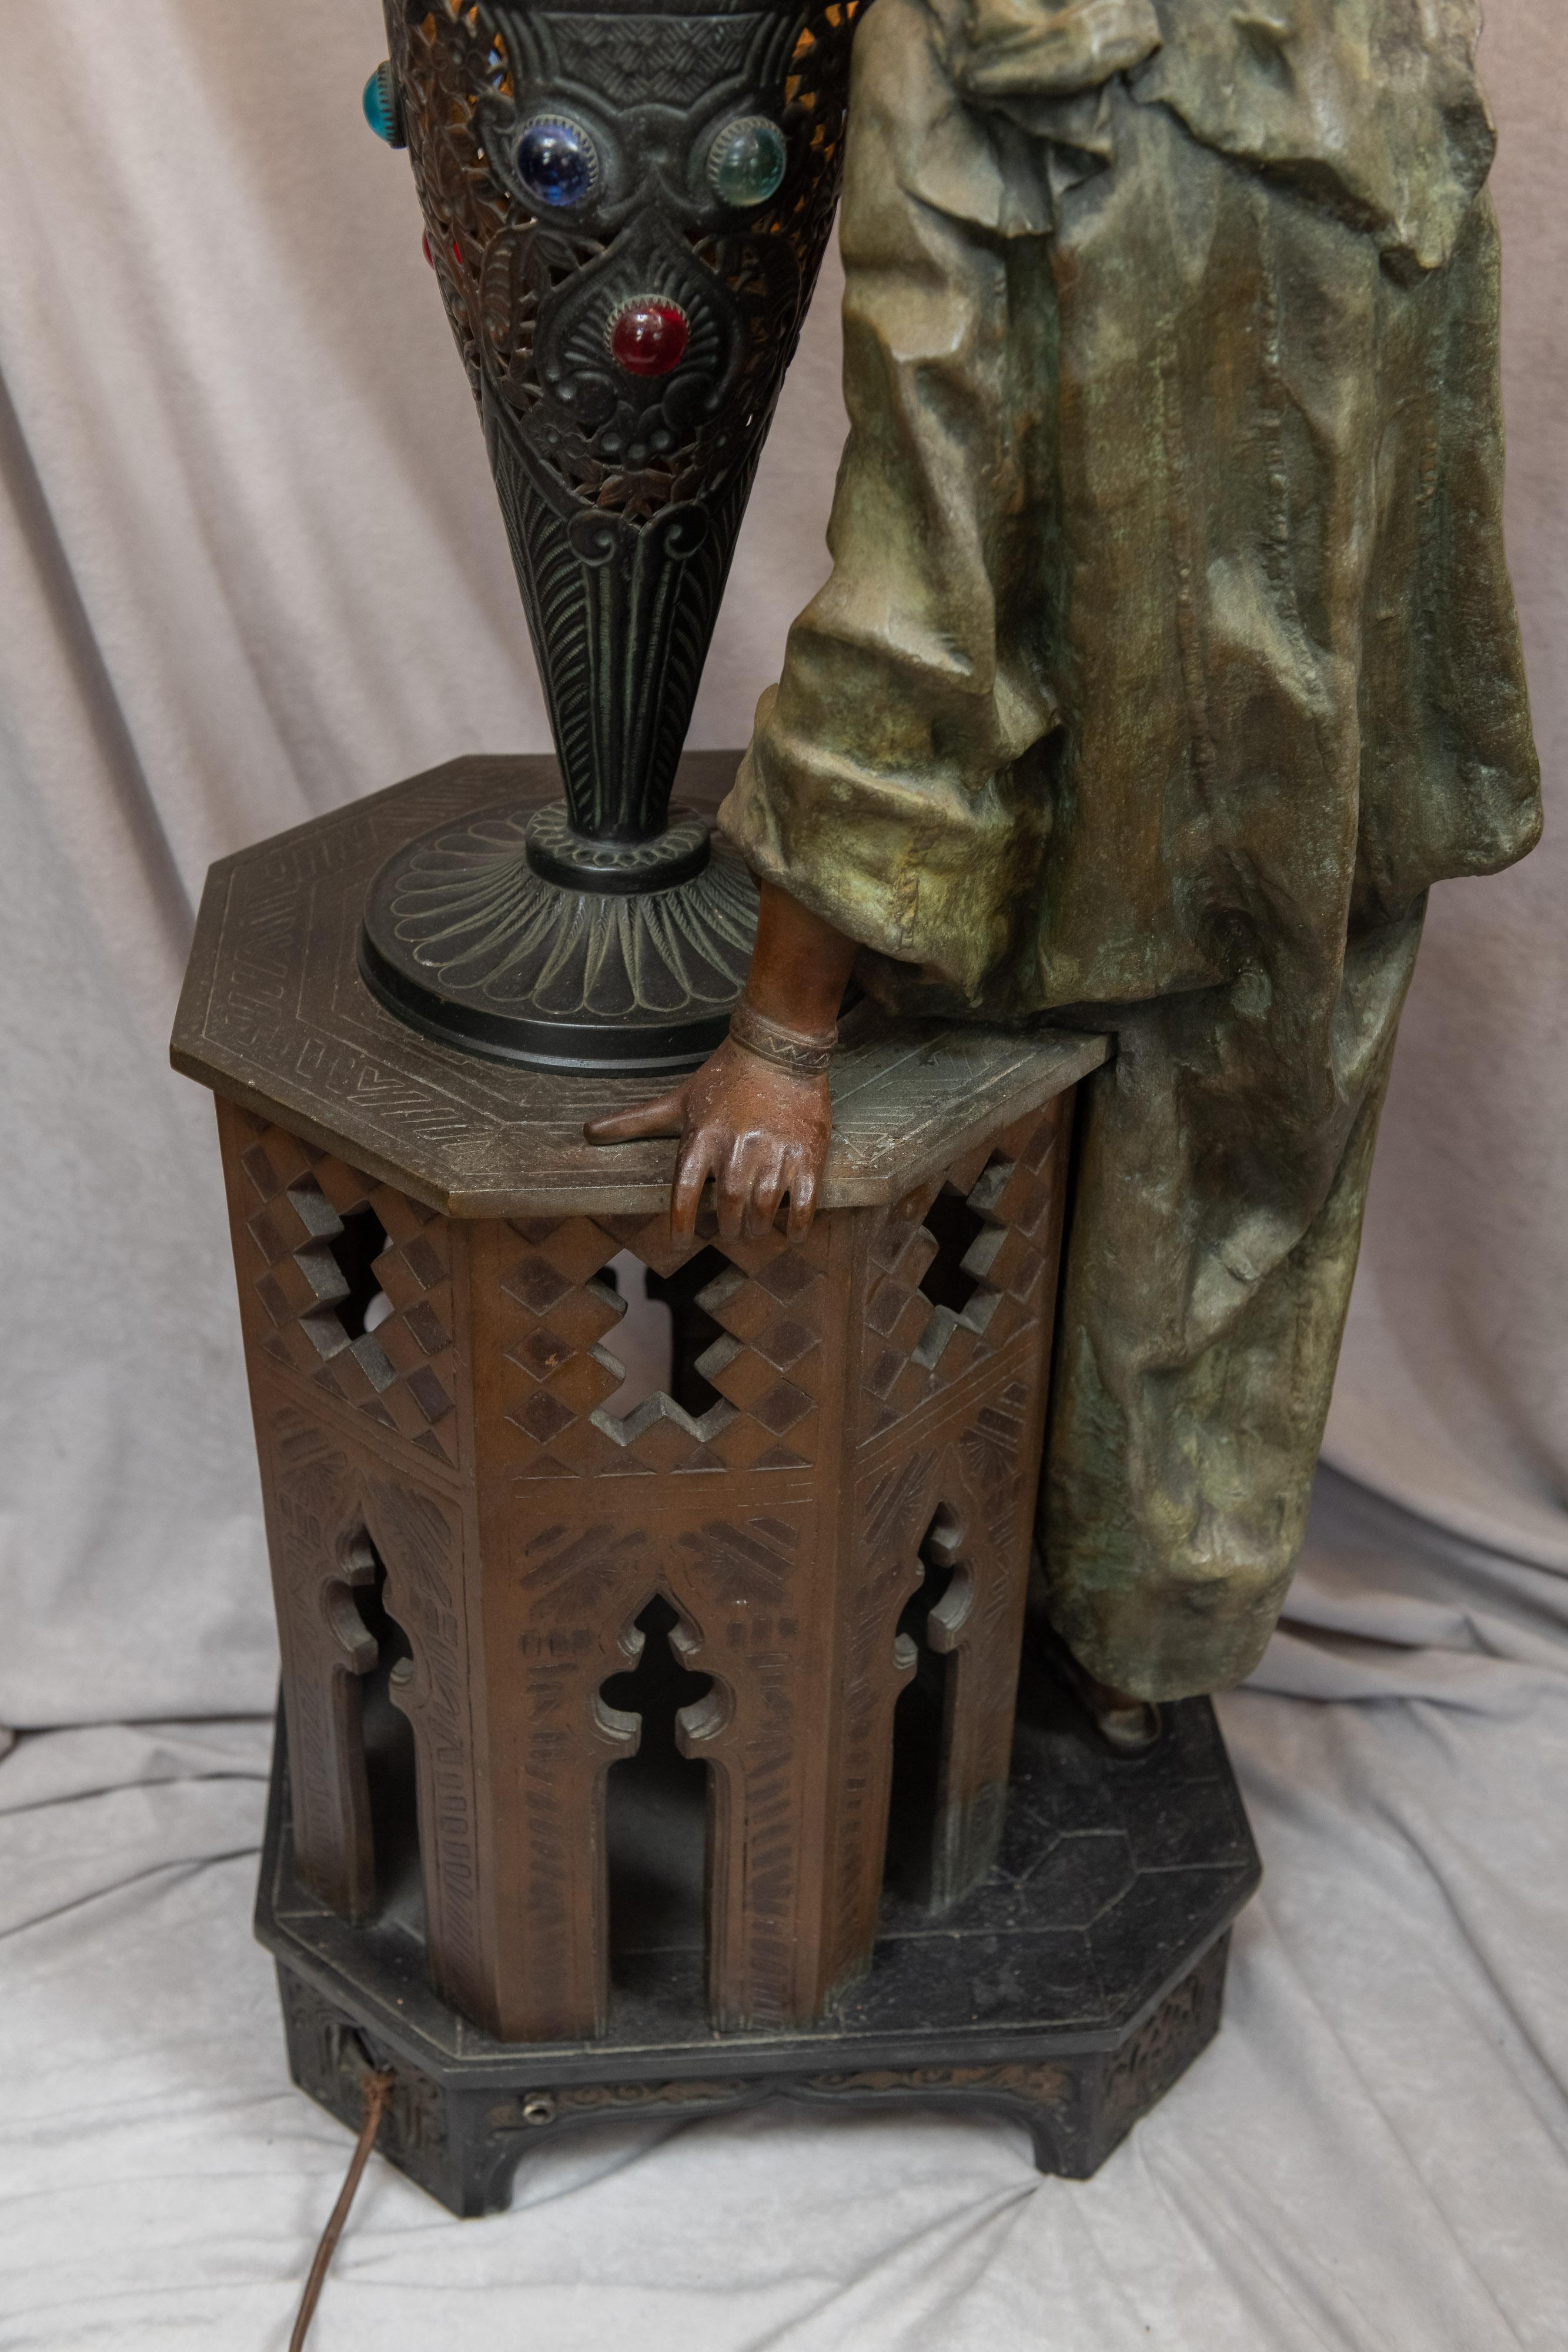 Huge Orientalist Theme Statue / Lamp w/Arab Woman Under a Brass Shade w/ Jewels 5